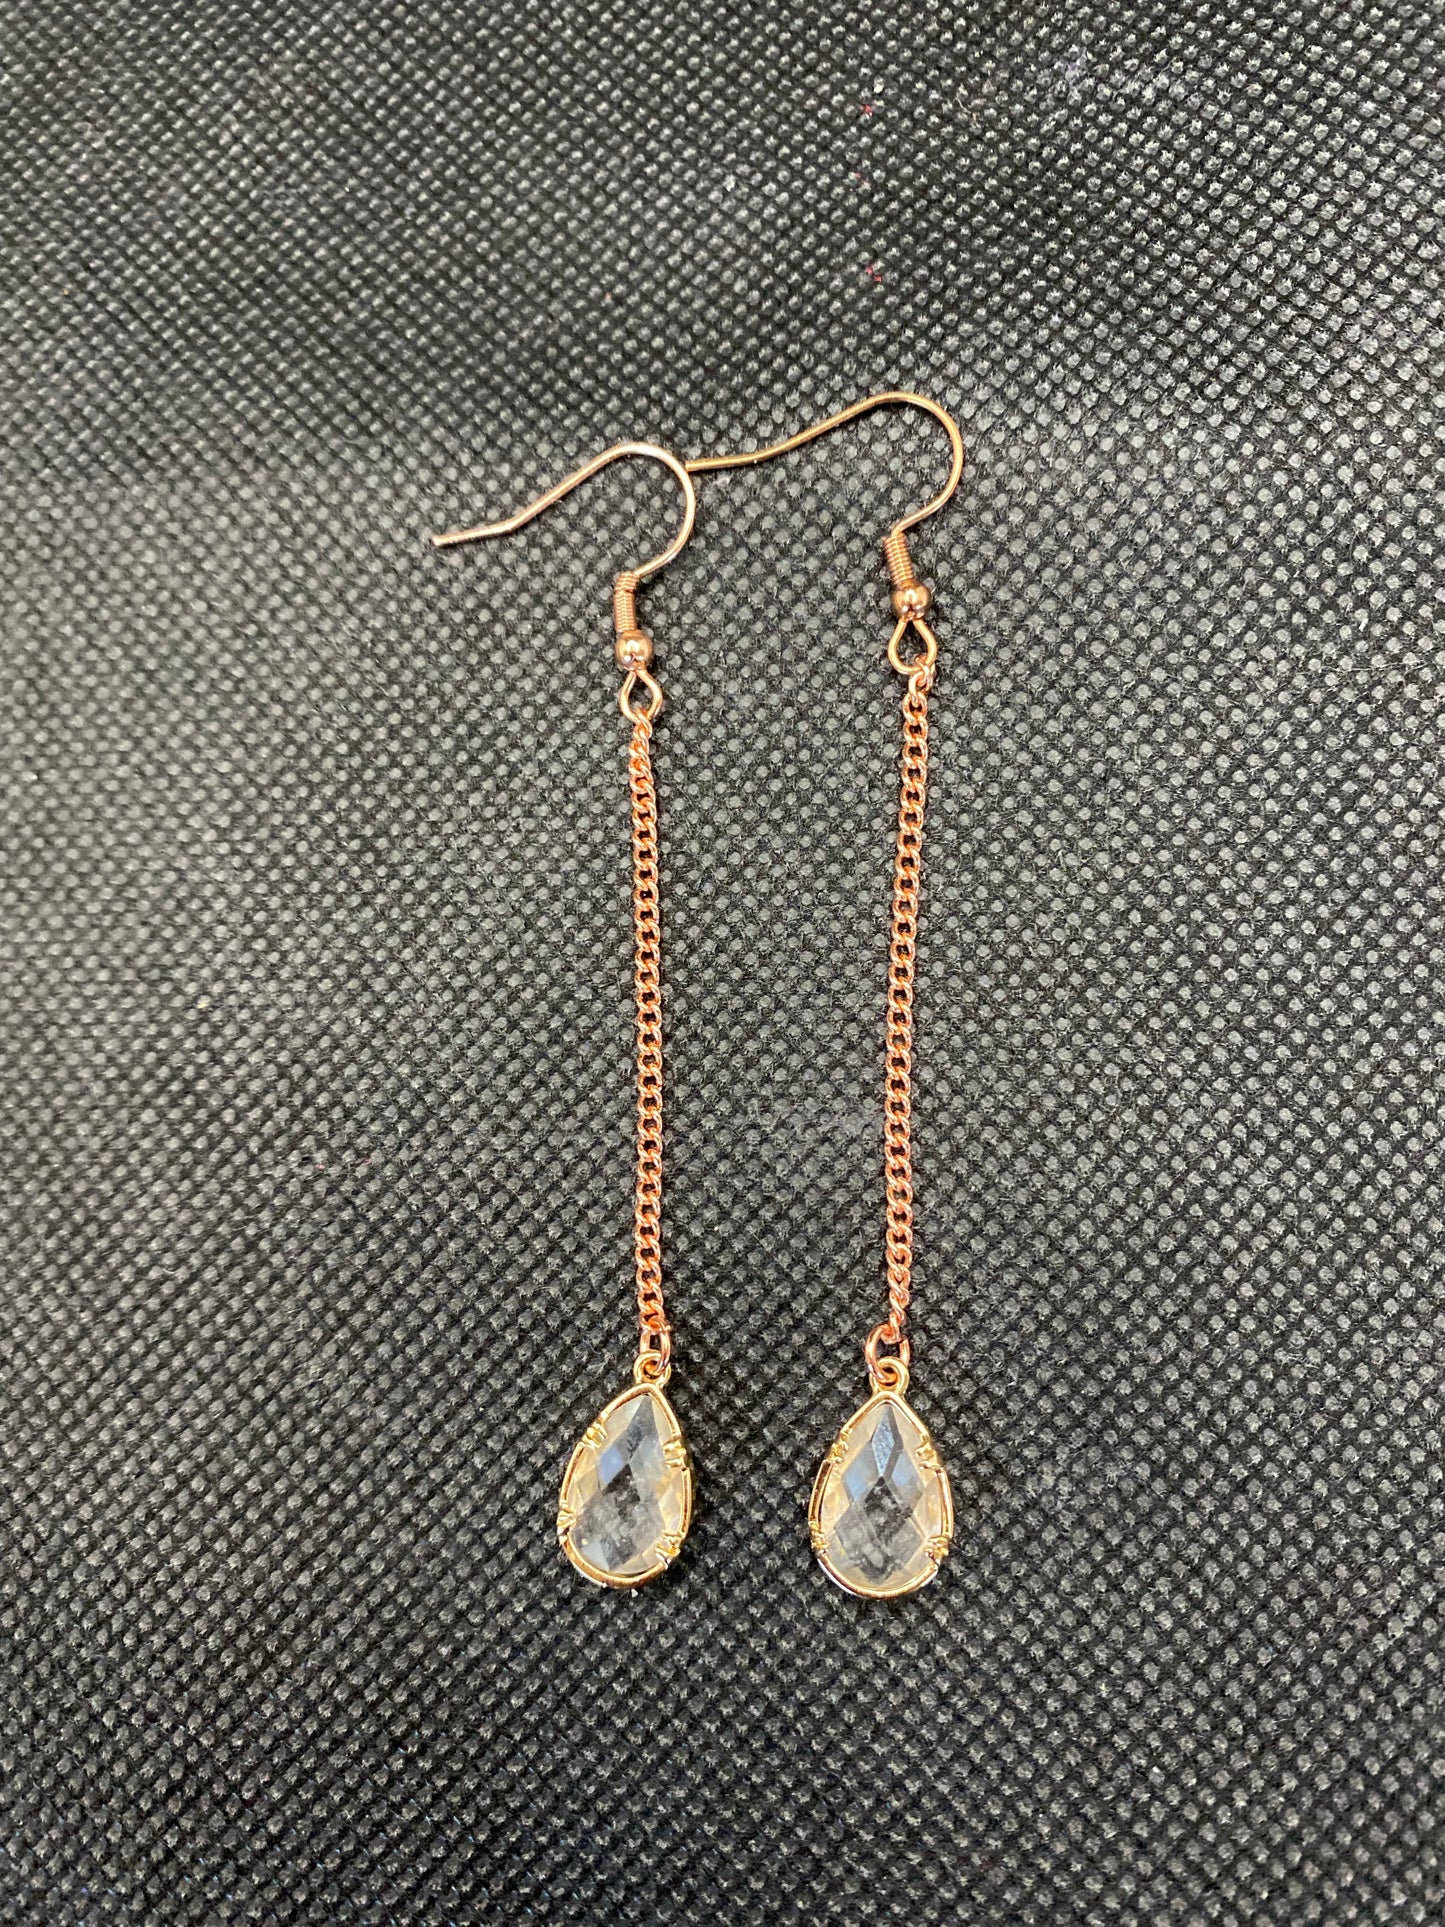 Diamond drop earrings - April birthstone